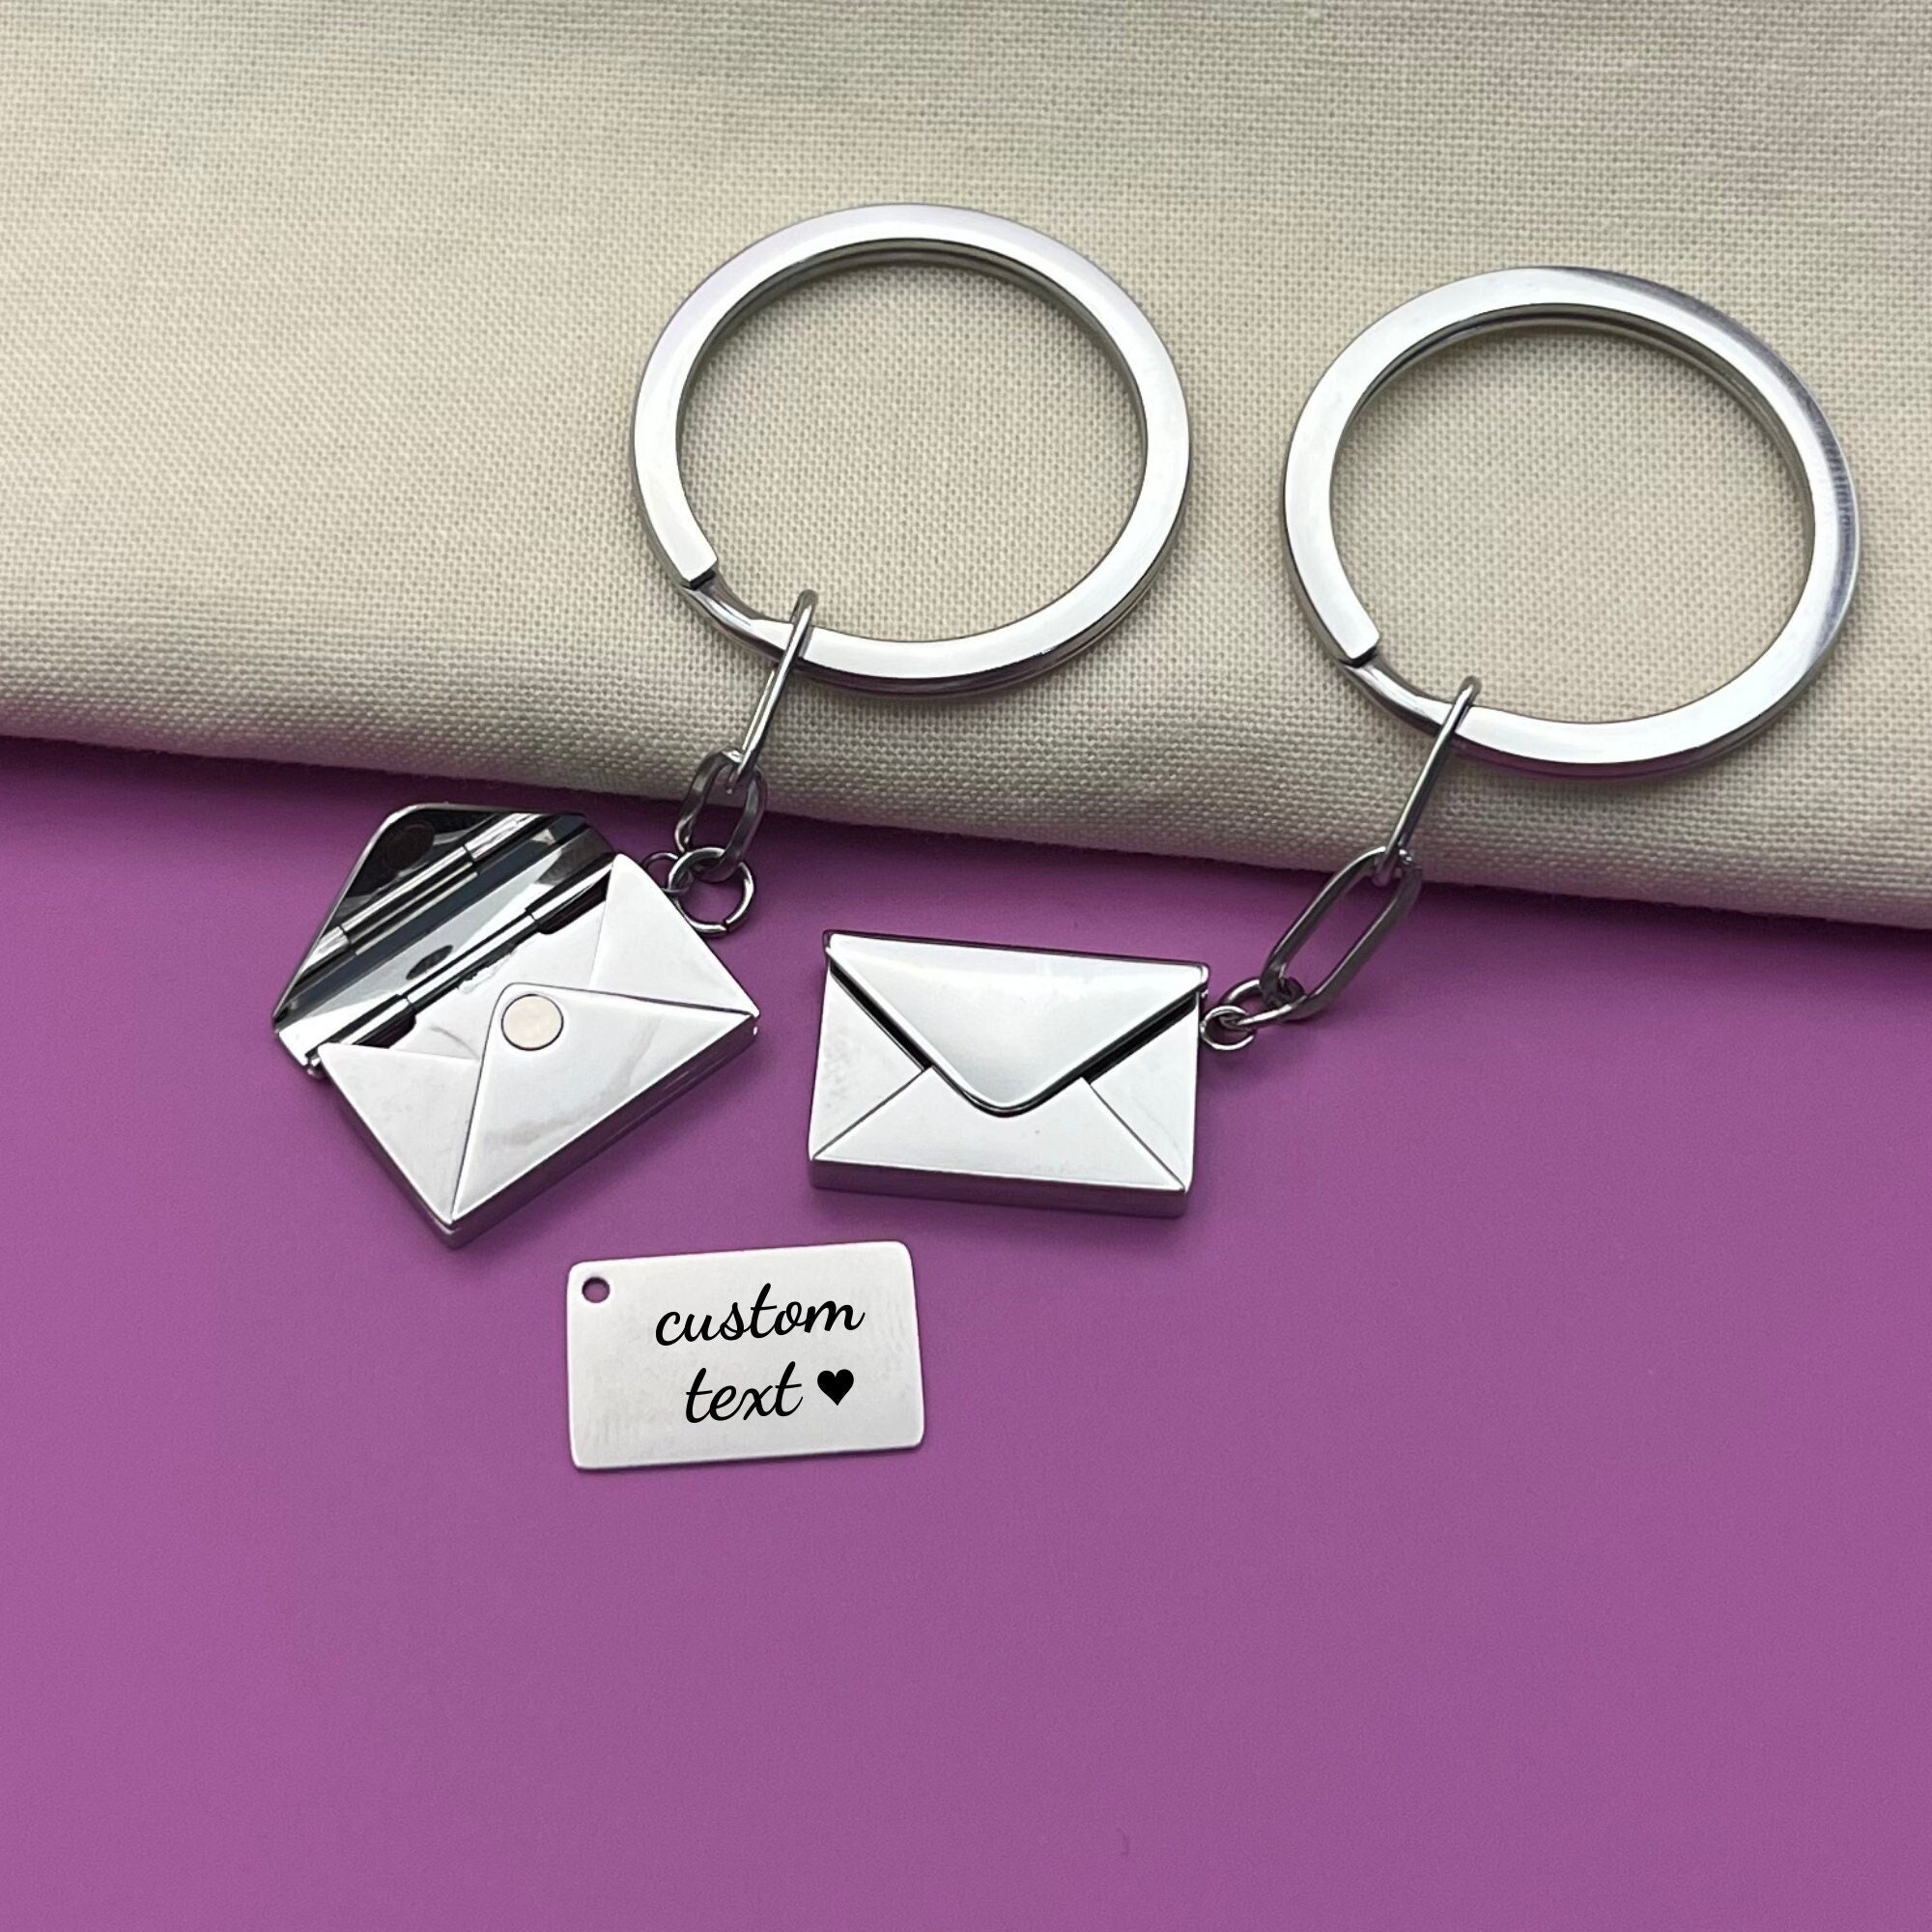 AGISLONE Custom Keychain Personalized Envelope Key Chain for Women, Name  Engraved Secret Message Love Letter Keychain (Gold)…